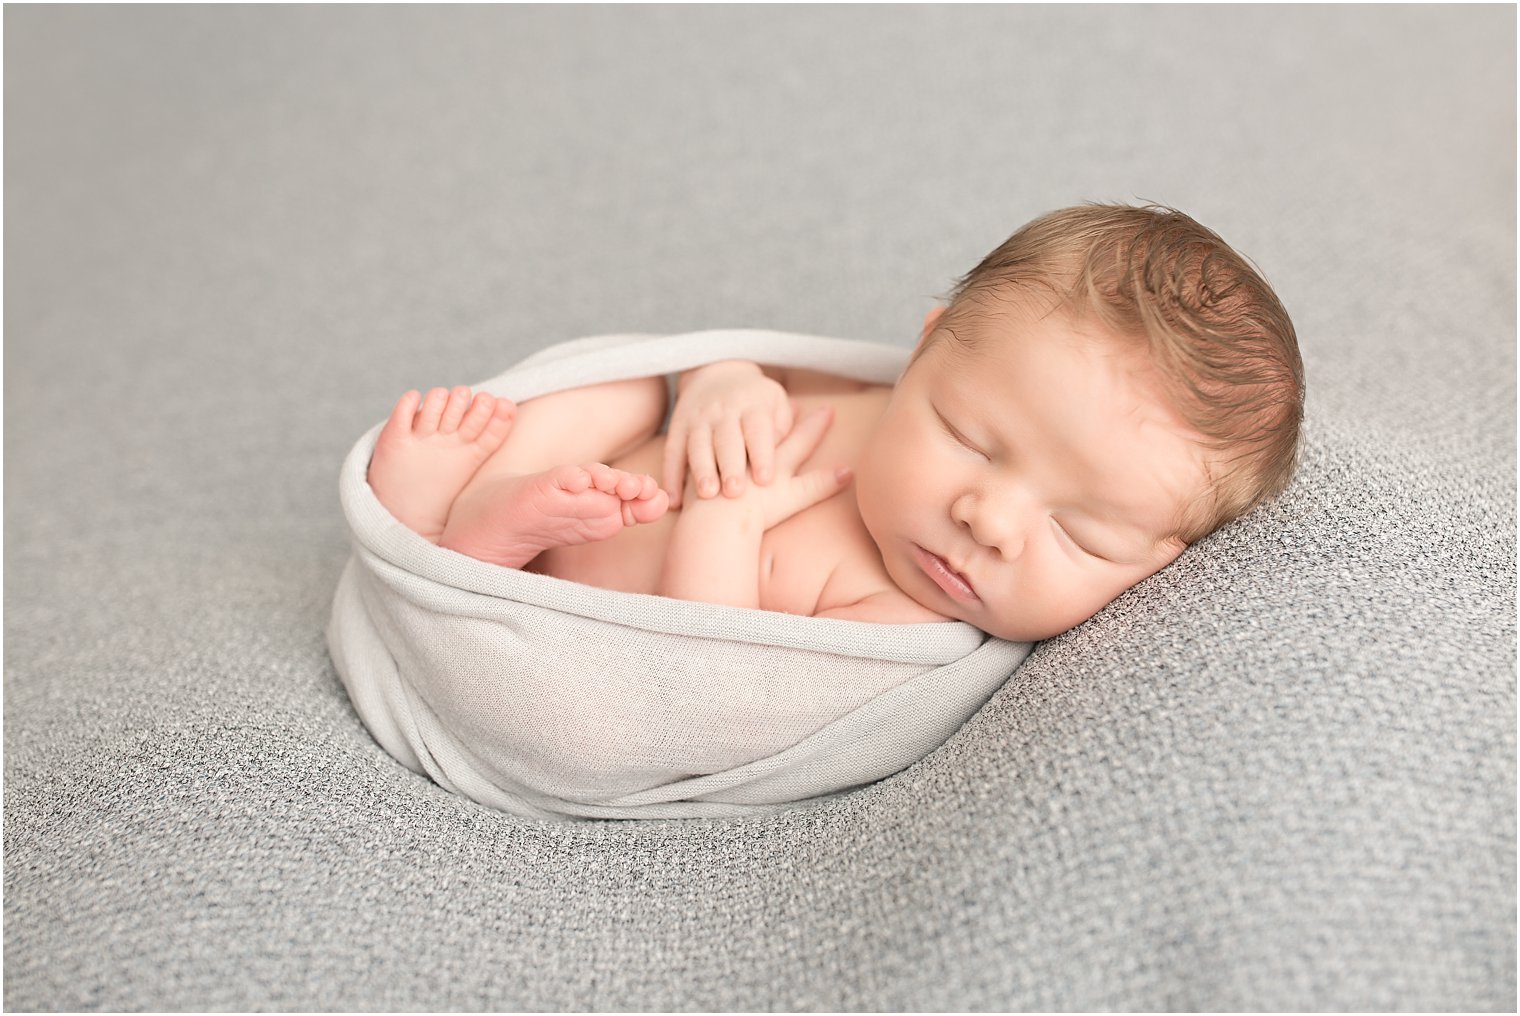 Newborn boy wrapped in gray blanket